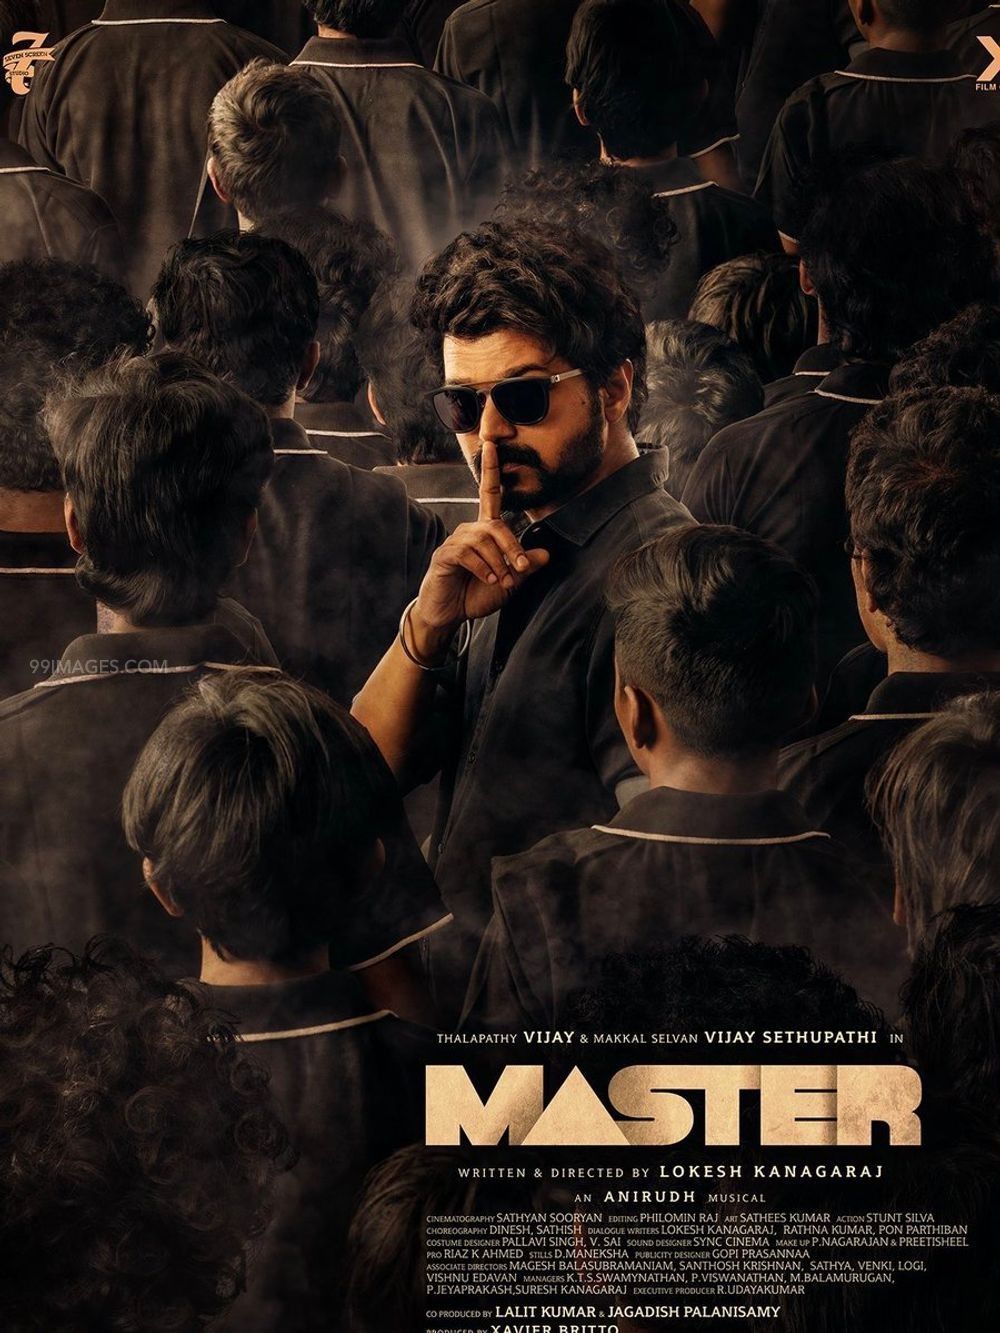 Master Movie Latest HD Photo / Stills, Posters & Wallpaper Download (1080p, 4K) #master #vijay #vijayh. Up the movie, Upcoming movies, Movie ringtones